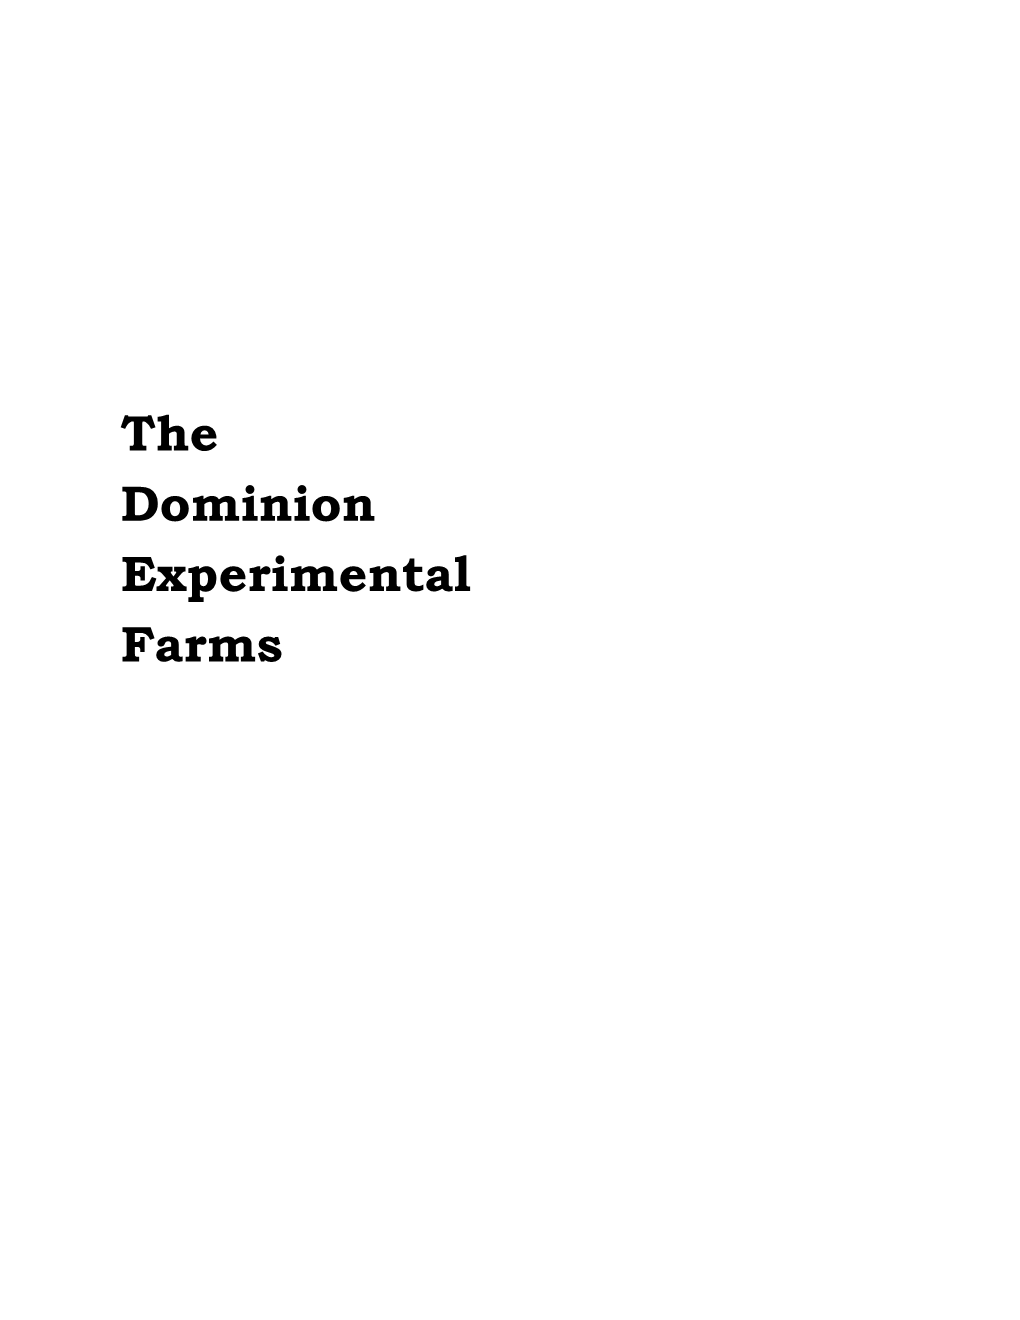 The Dominion Experimental Farms. 1925